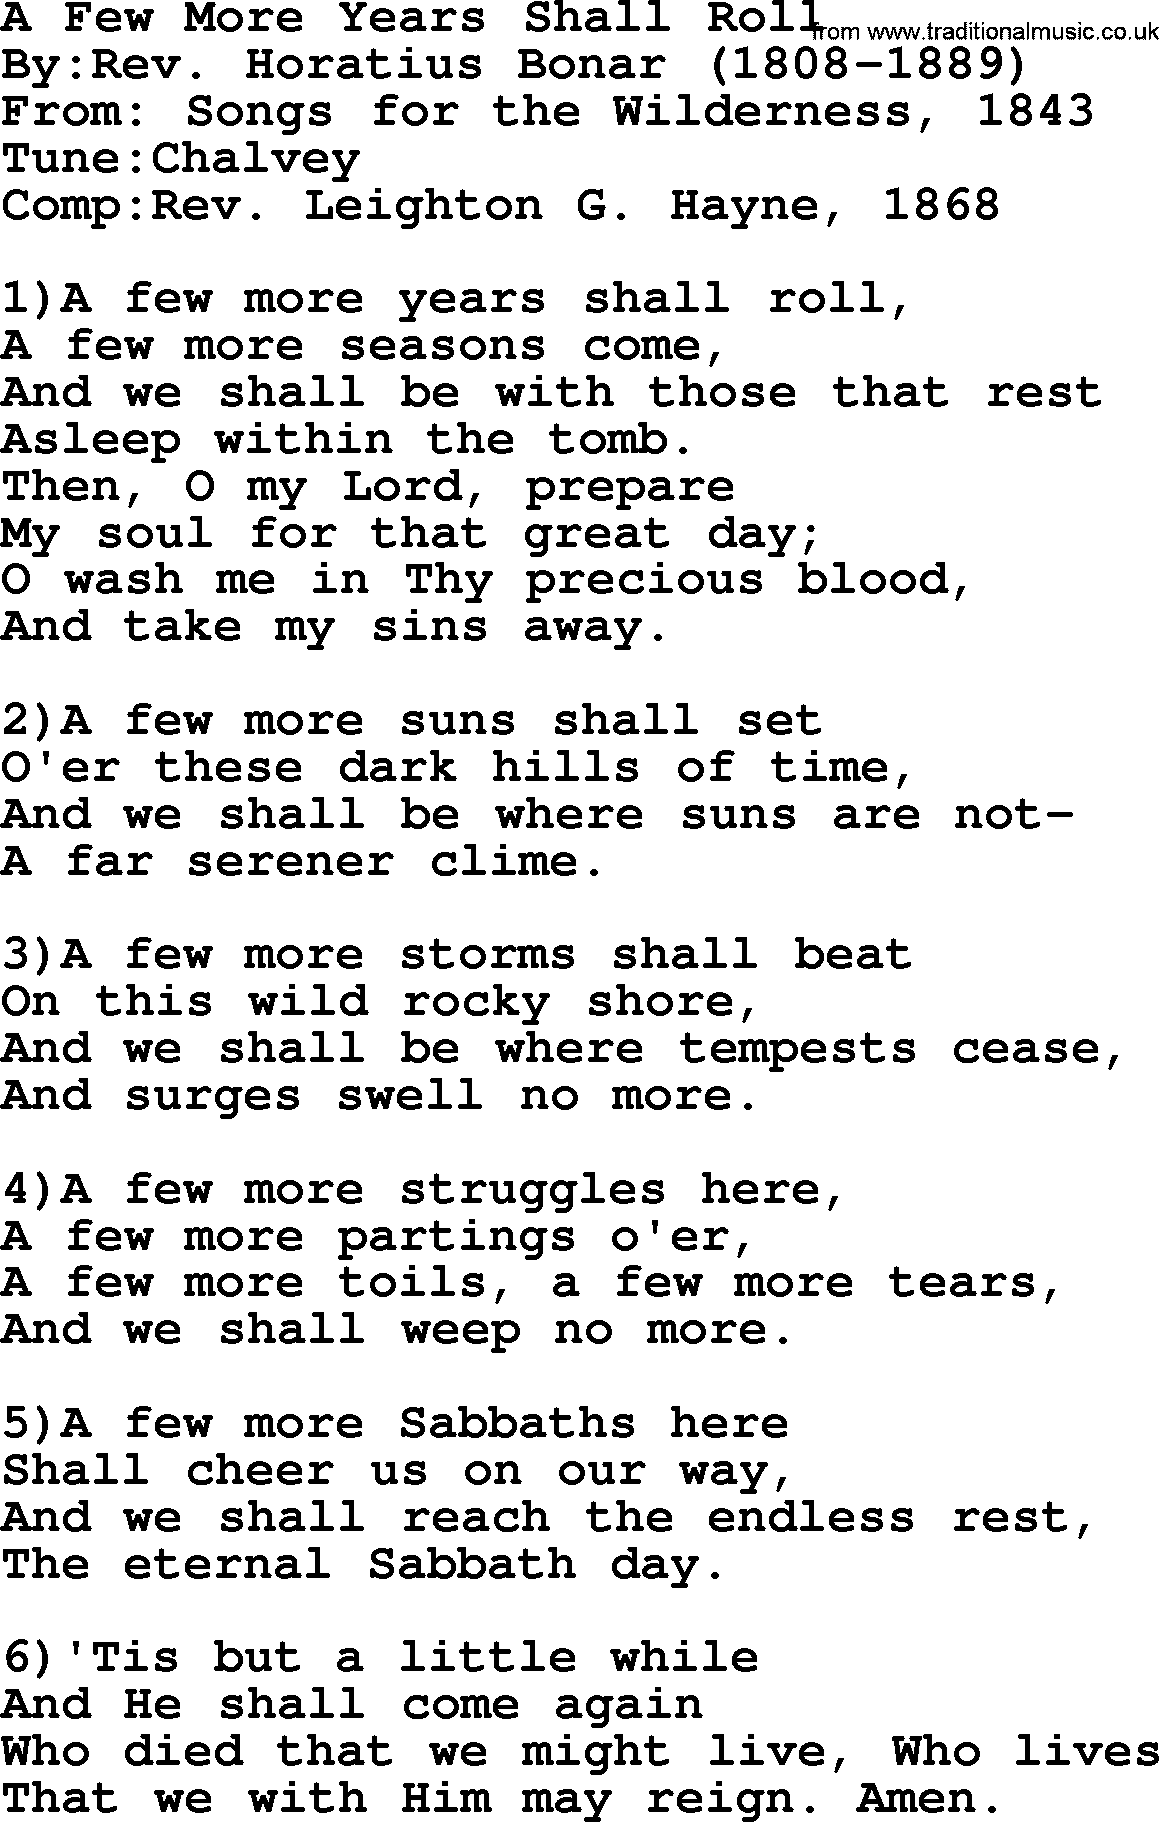 Methodist Hymn: A Few More Years Shall Roll, lyrics